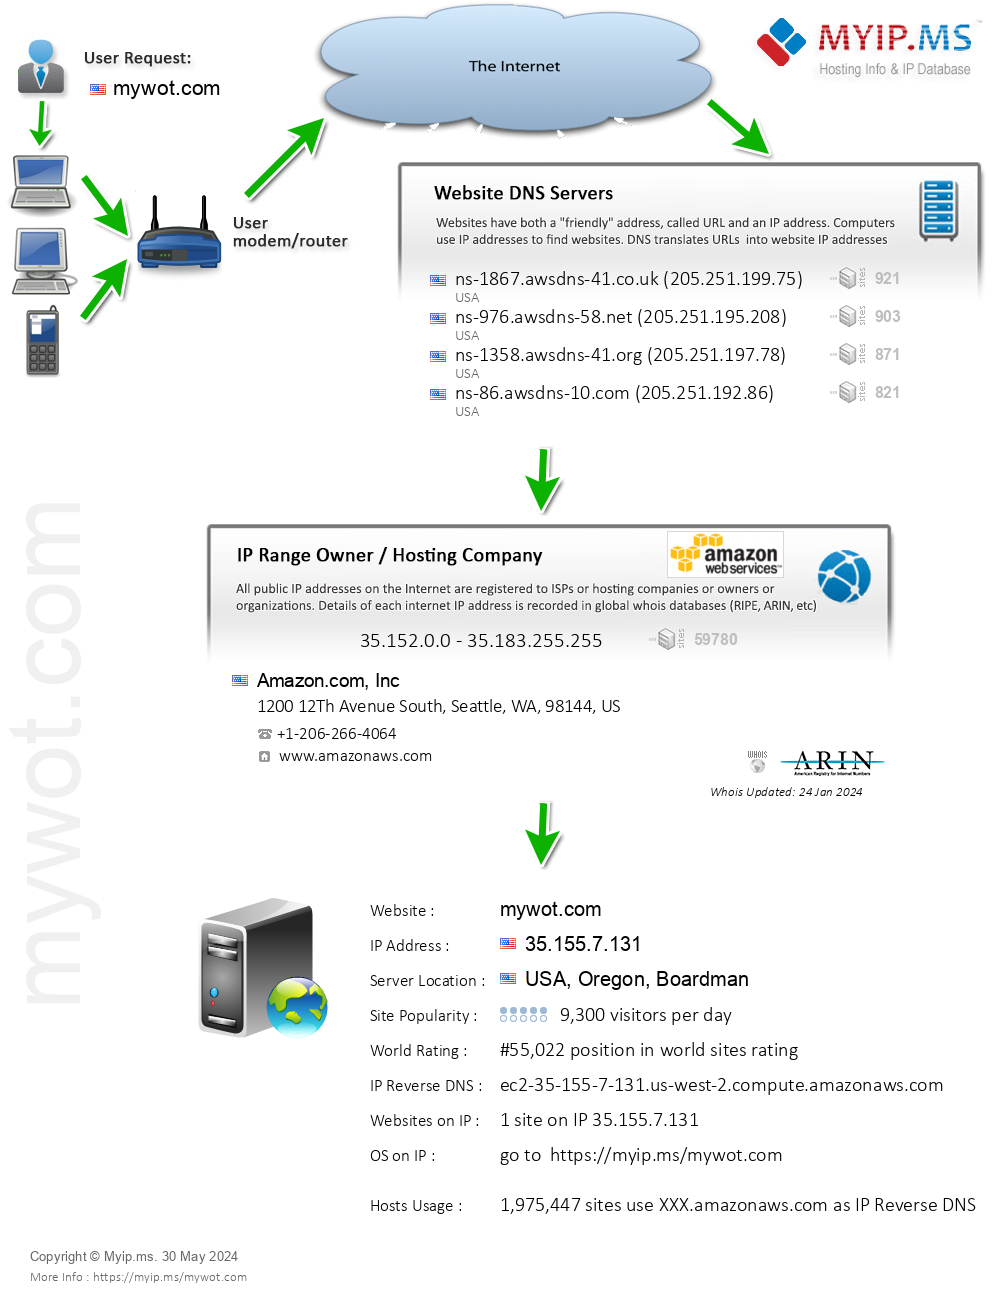 Mywot.com - Website Hosting Visual IP Diagram